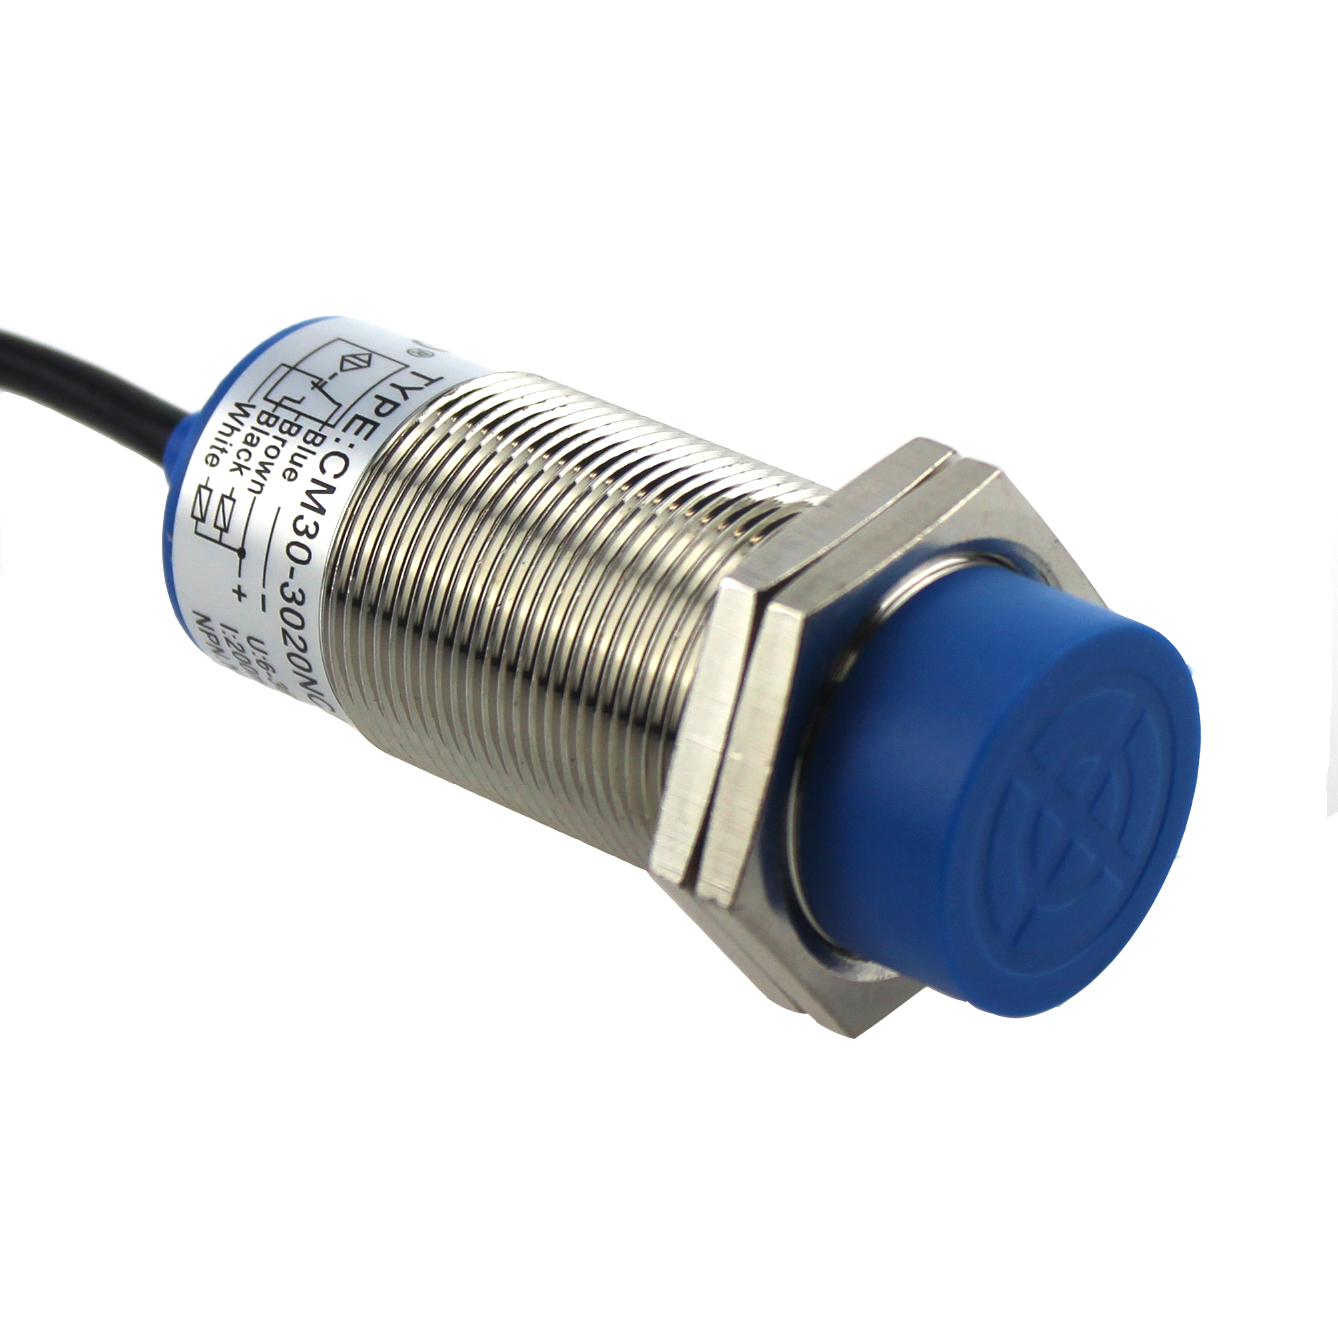 CM30-3020NC capacitance proximity switch sensor